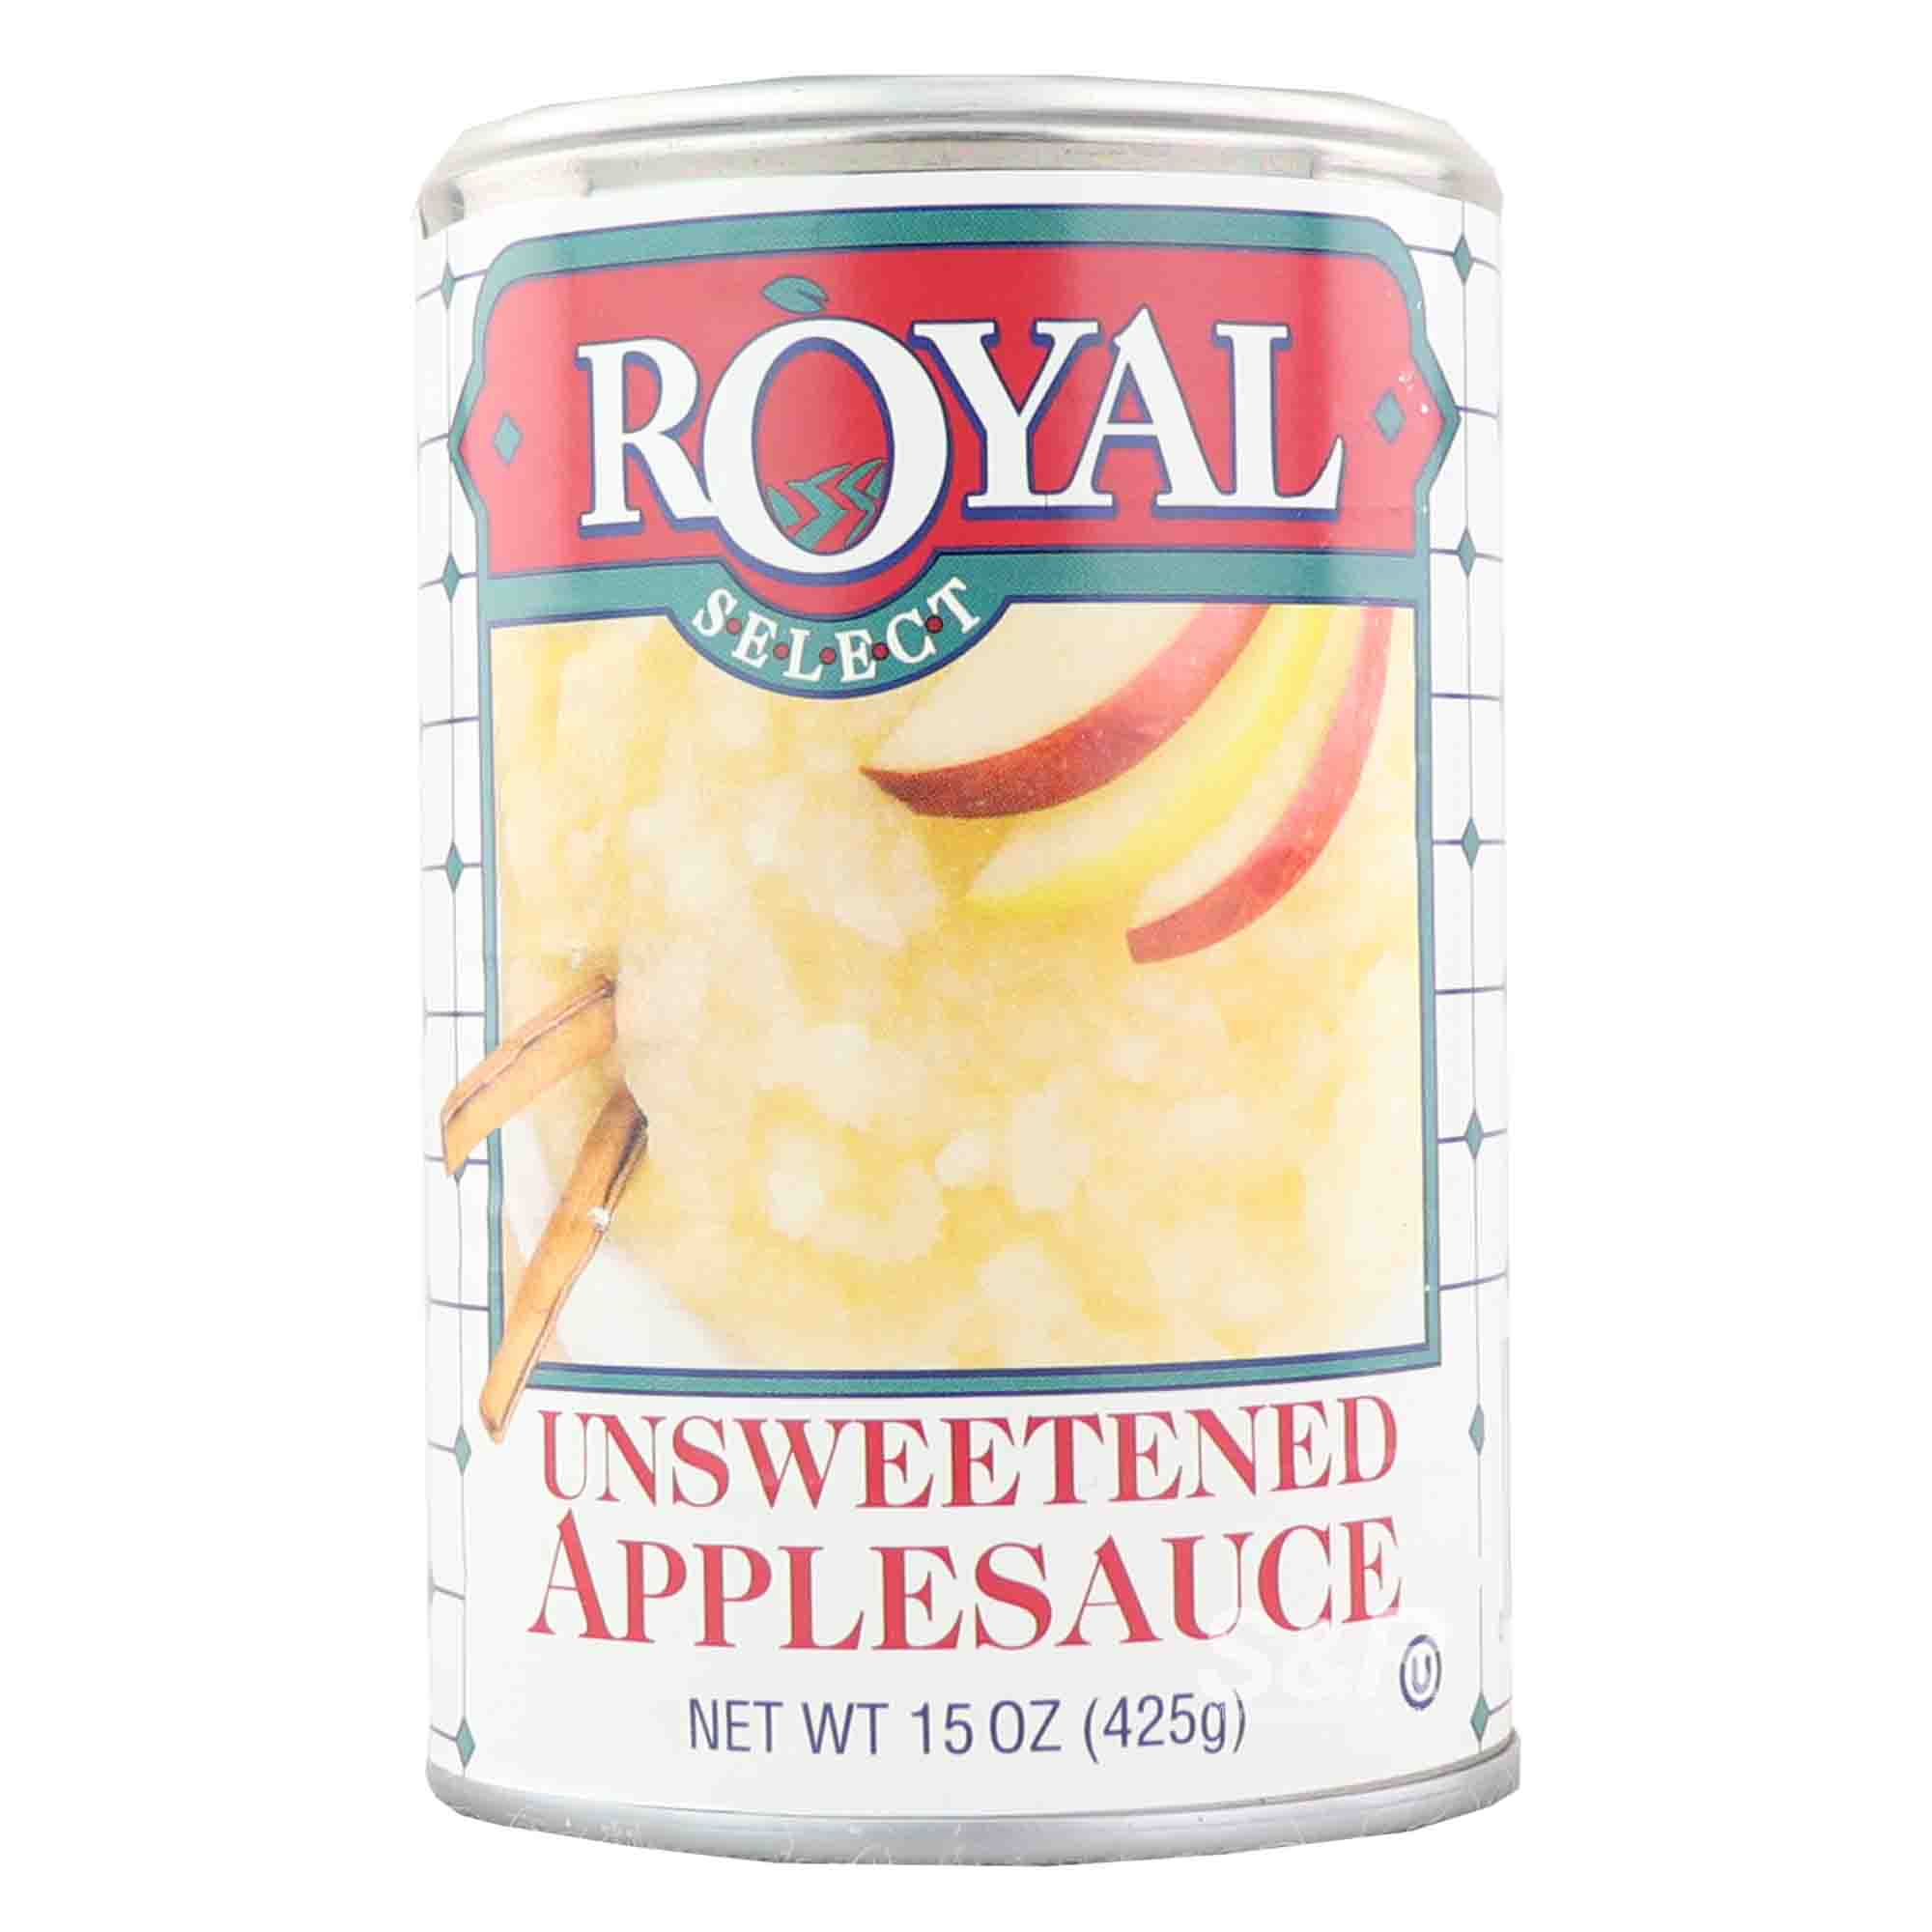 Royal Select Unsweetened Applesauce 425g